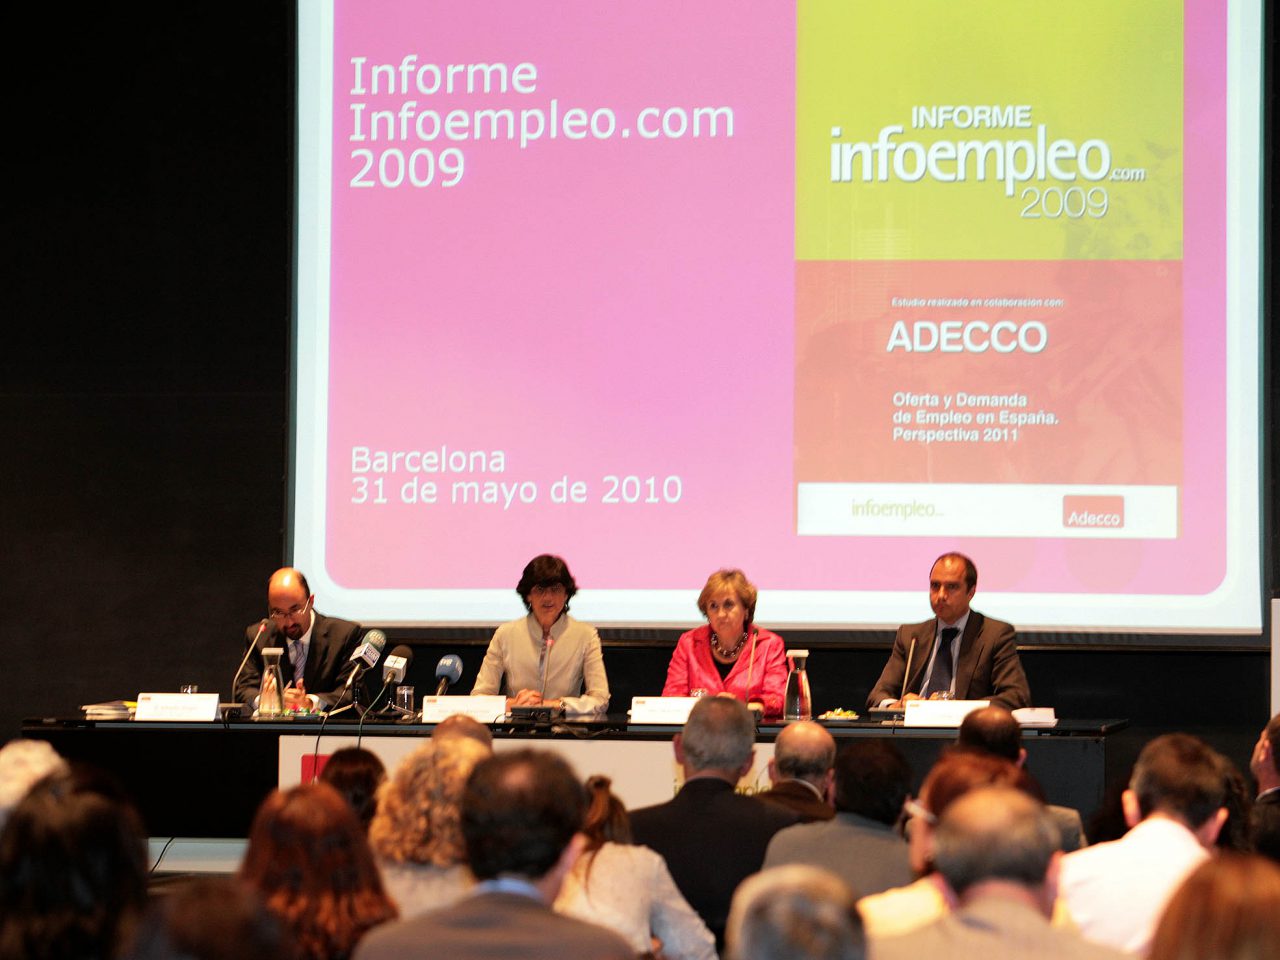 Presentación del Informe Infoempleo en Barcelona